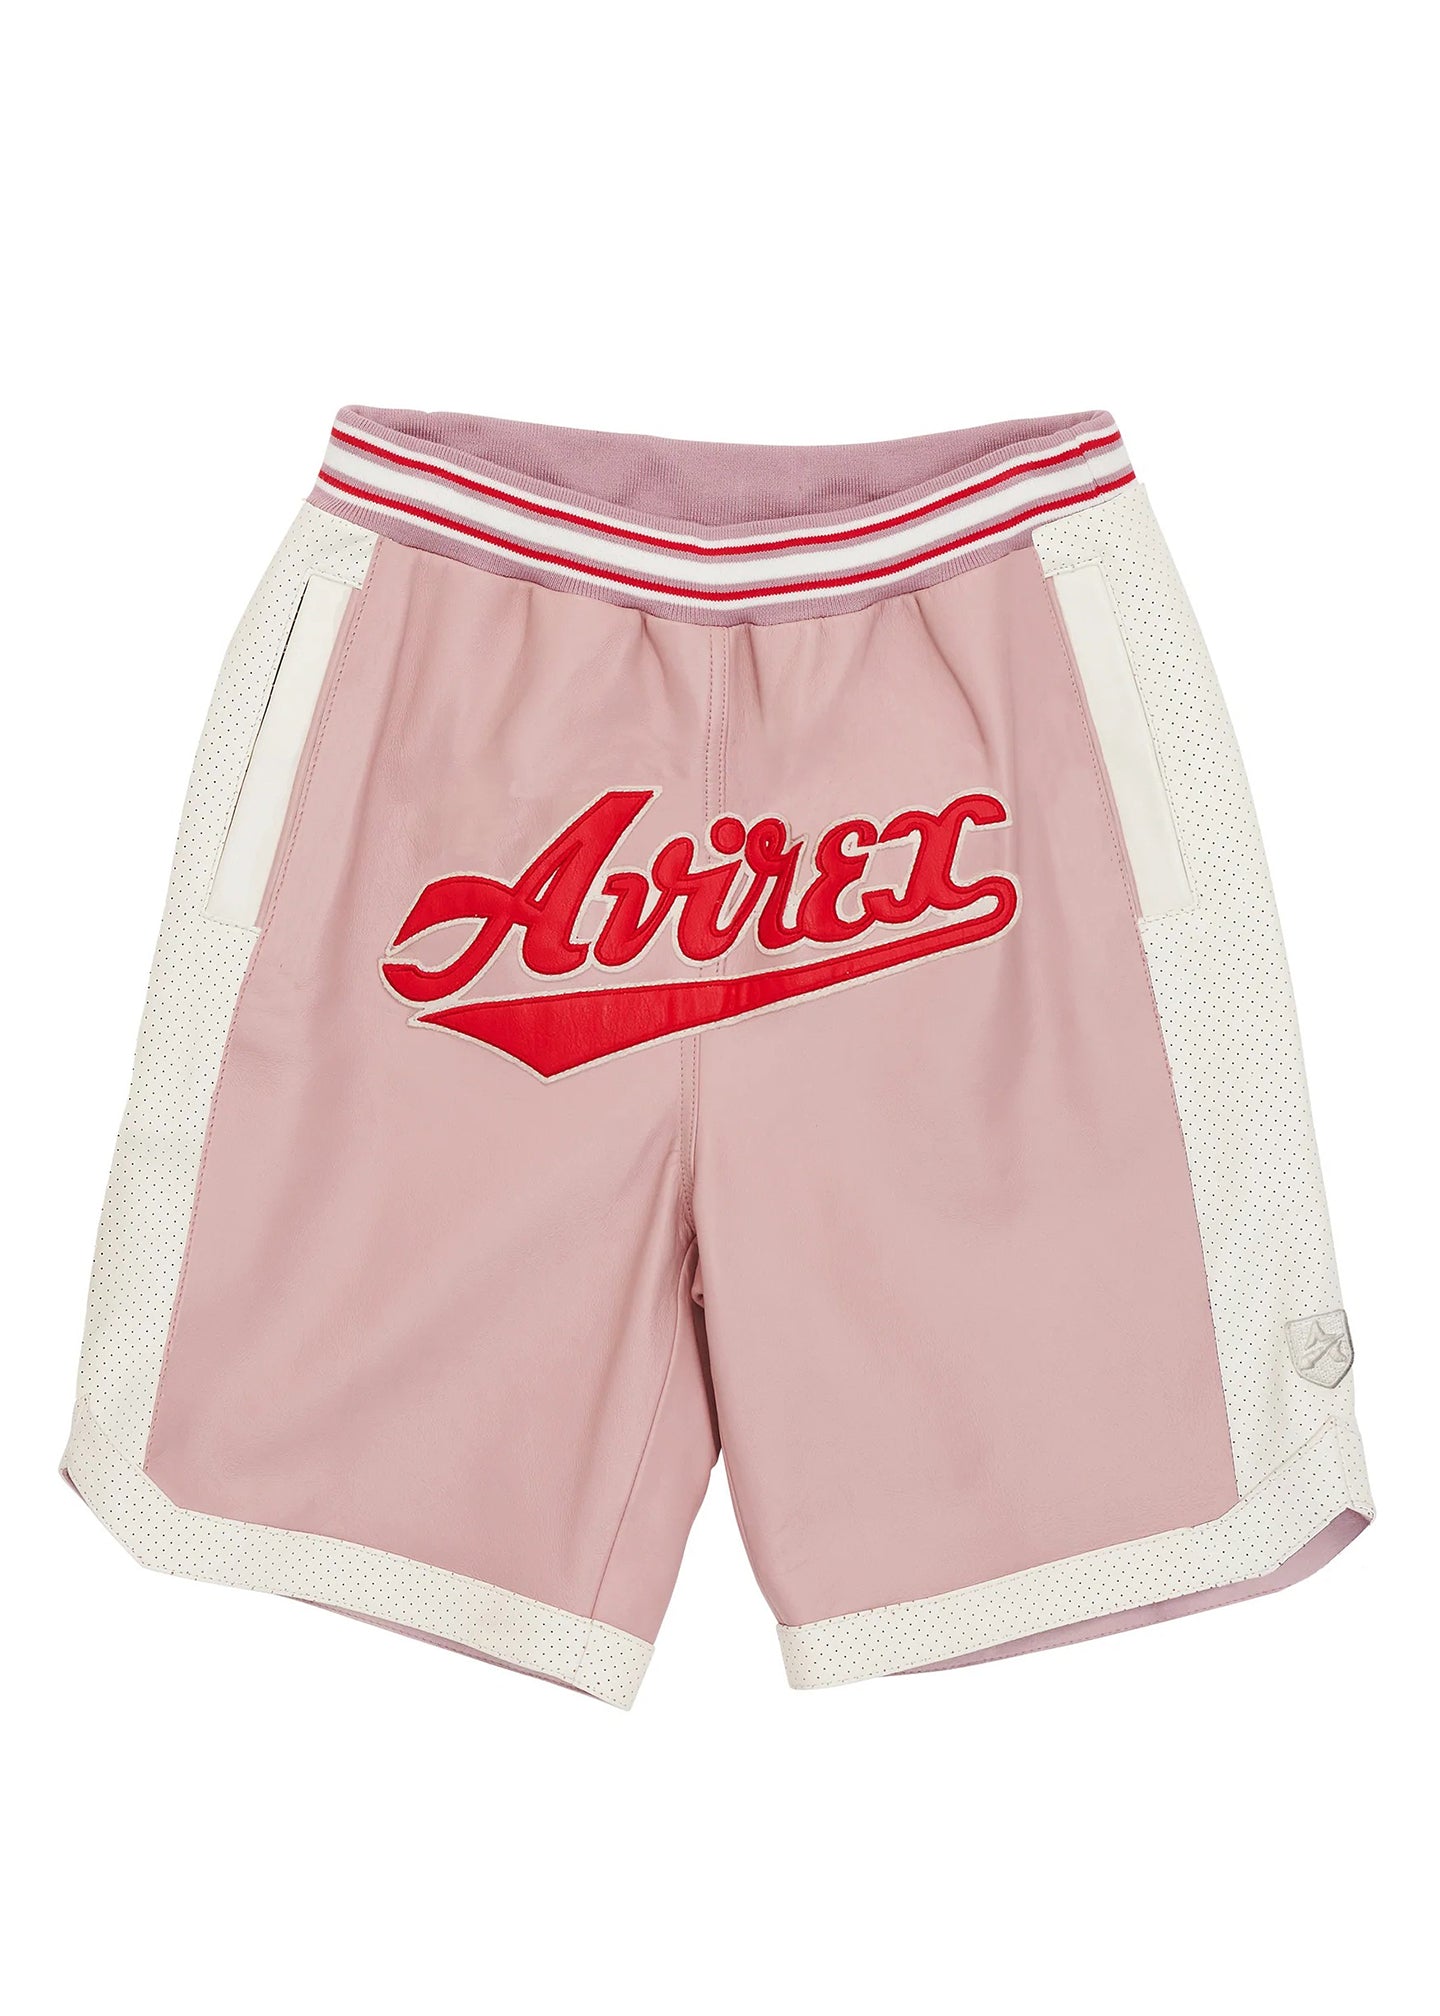 Avirex varsity leather short in pink